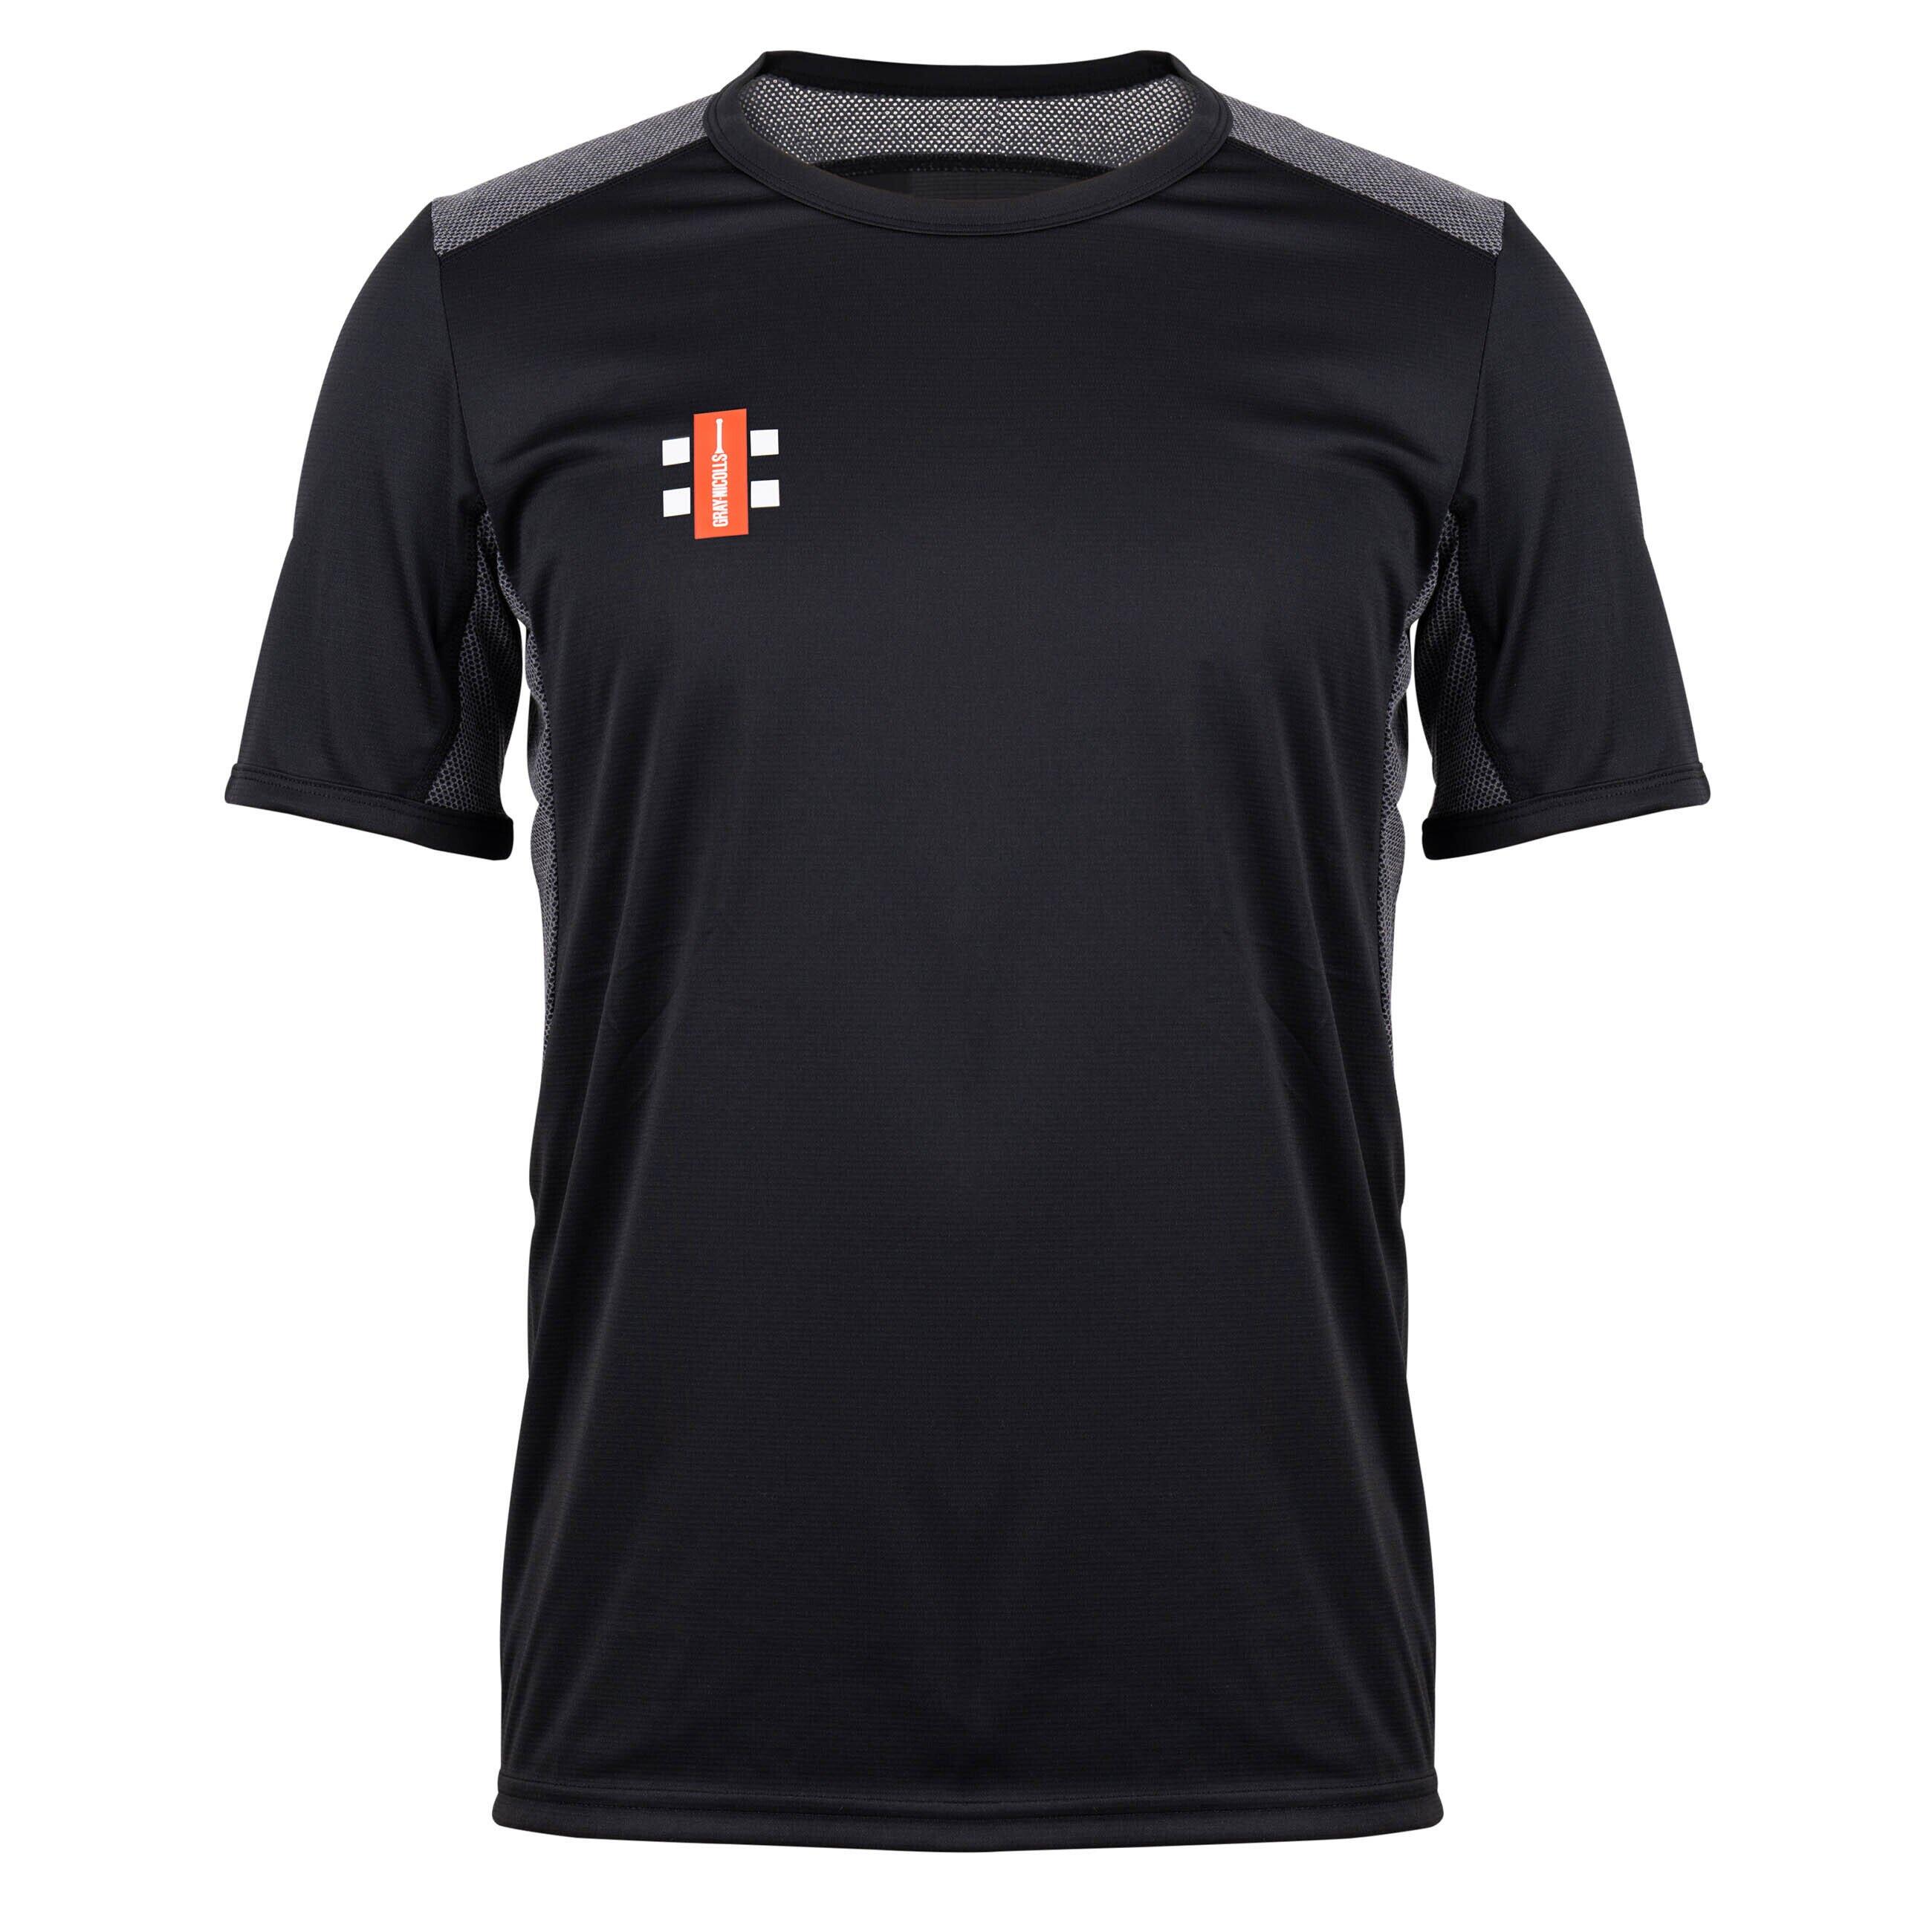 GRAY-NICOLLS Pro Performance Short Sleeve Men's T-Shirt,  Black